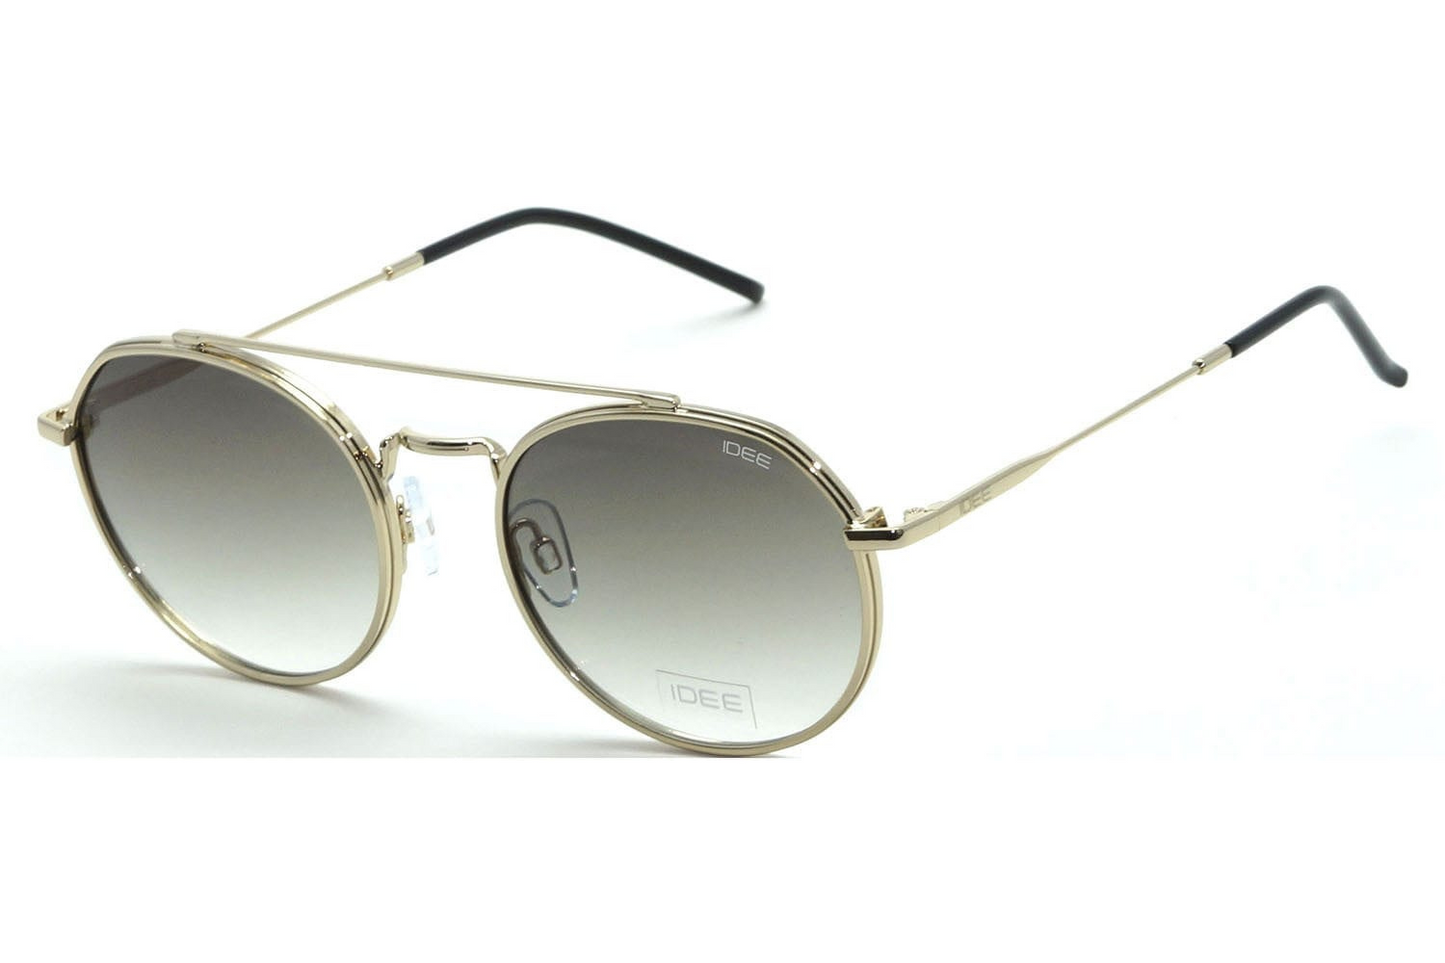 IDEE Sunglasses S2346 C1